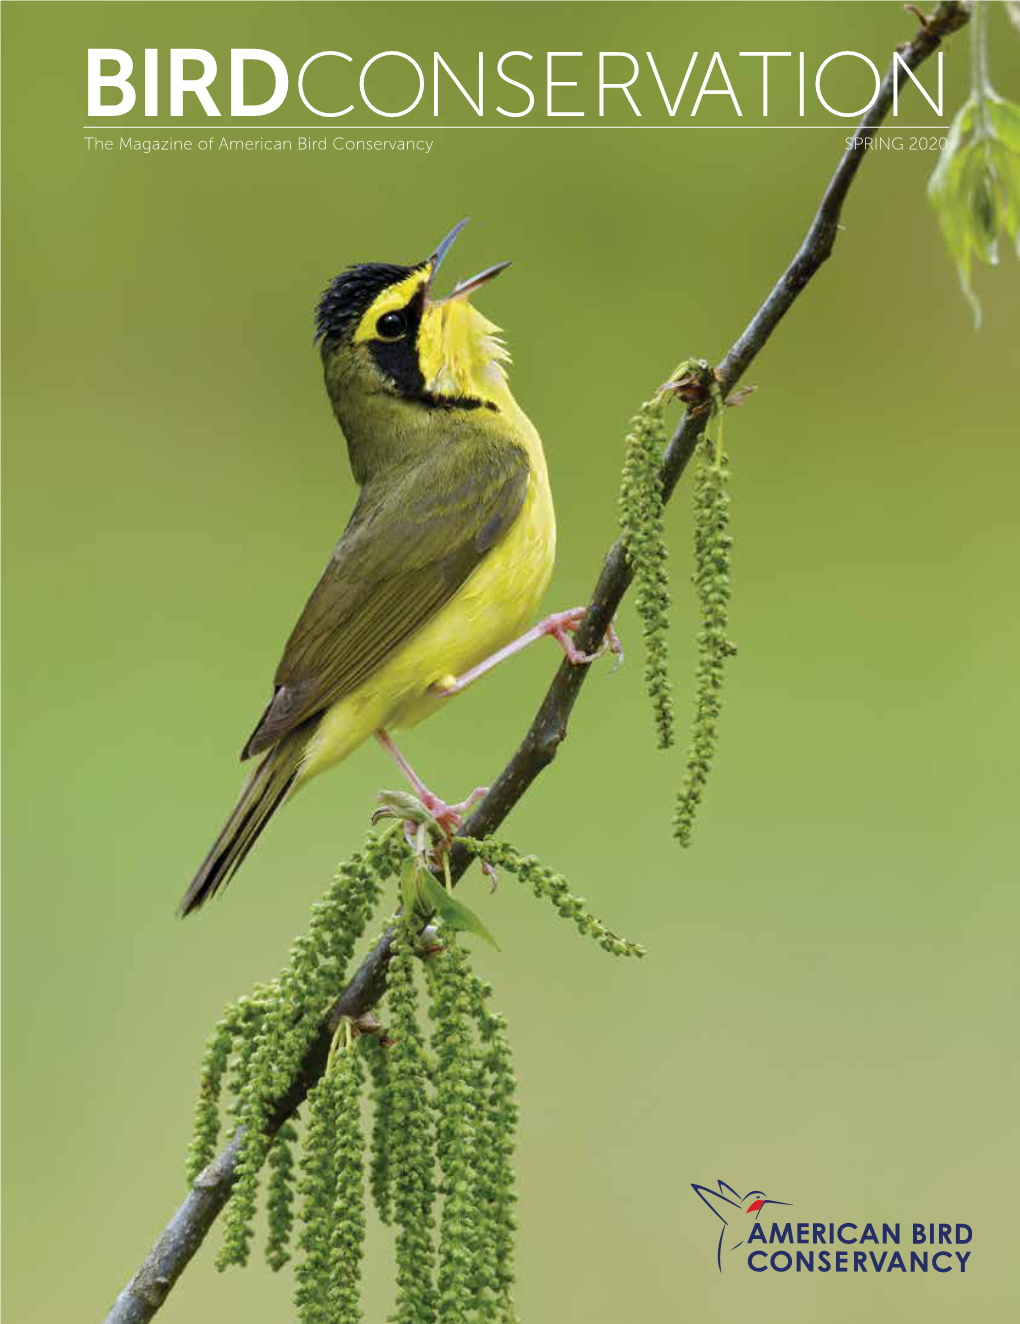 BIRDCONSERVATION the Magazine of American Bird Conservancy SPRING 2020 BIRD’S EYE VIEW